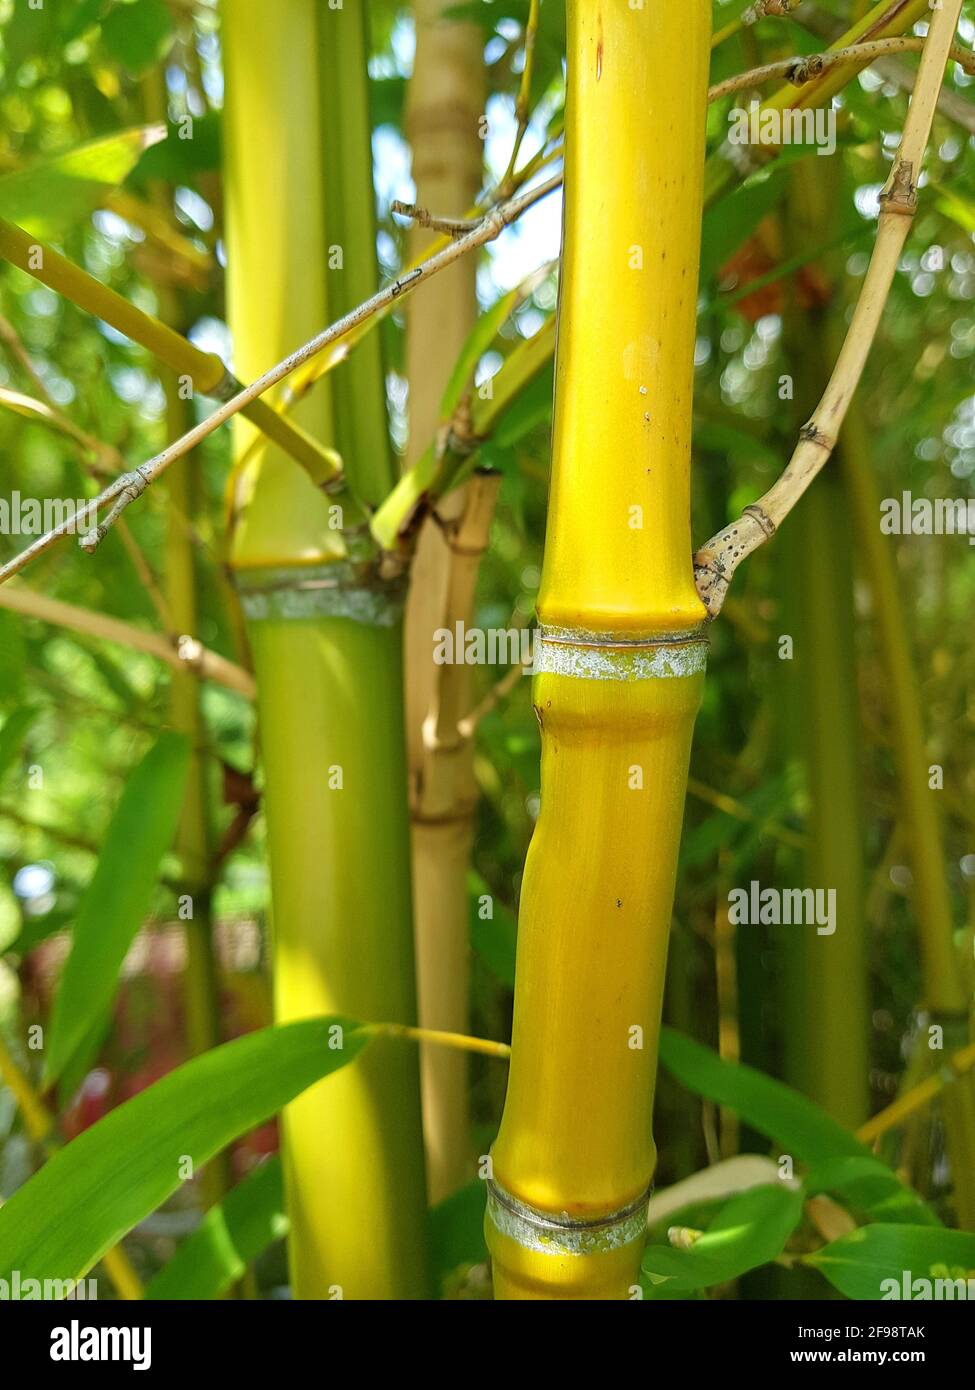 Bambur tubes with knots Stock Photo